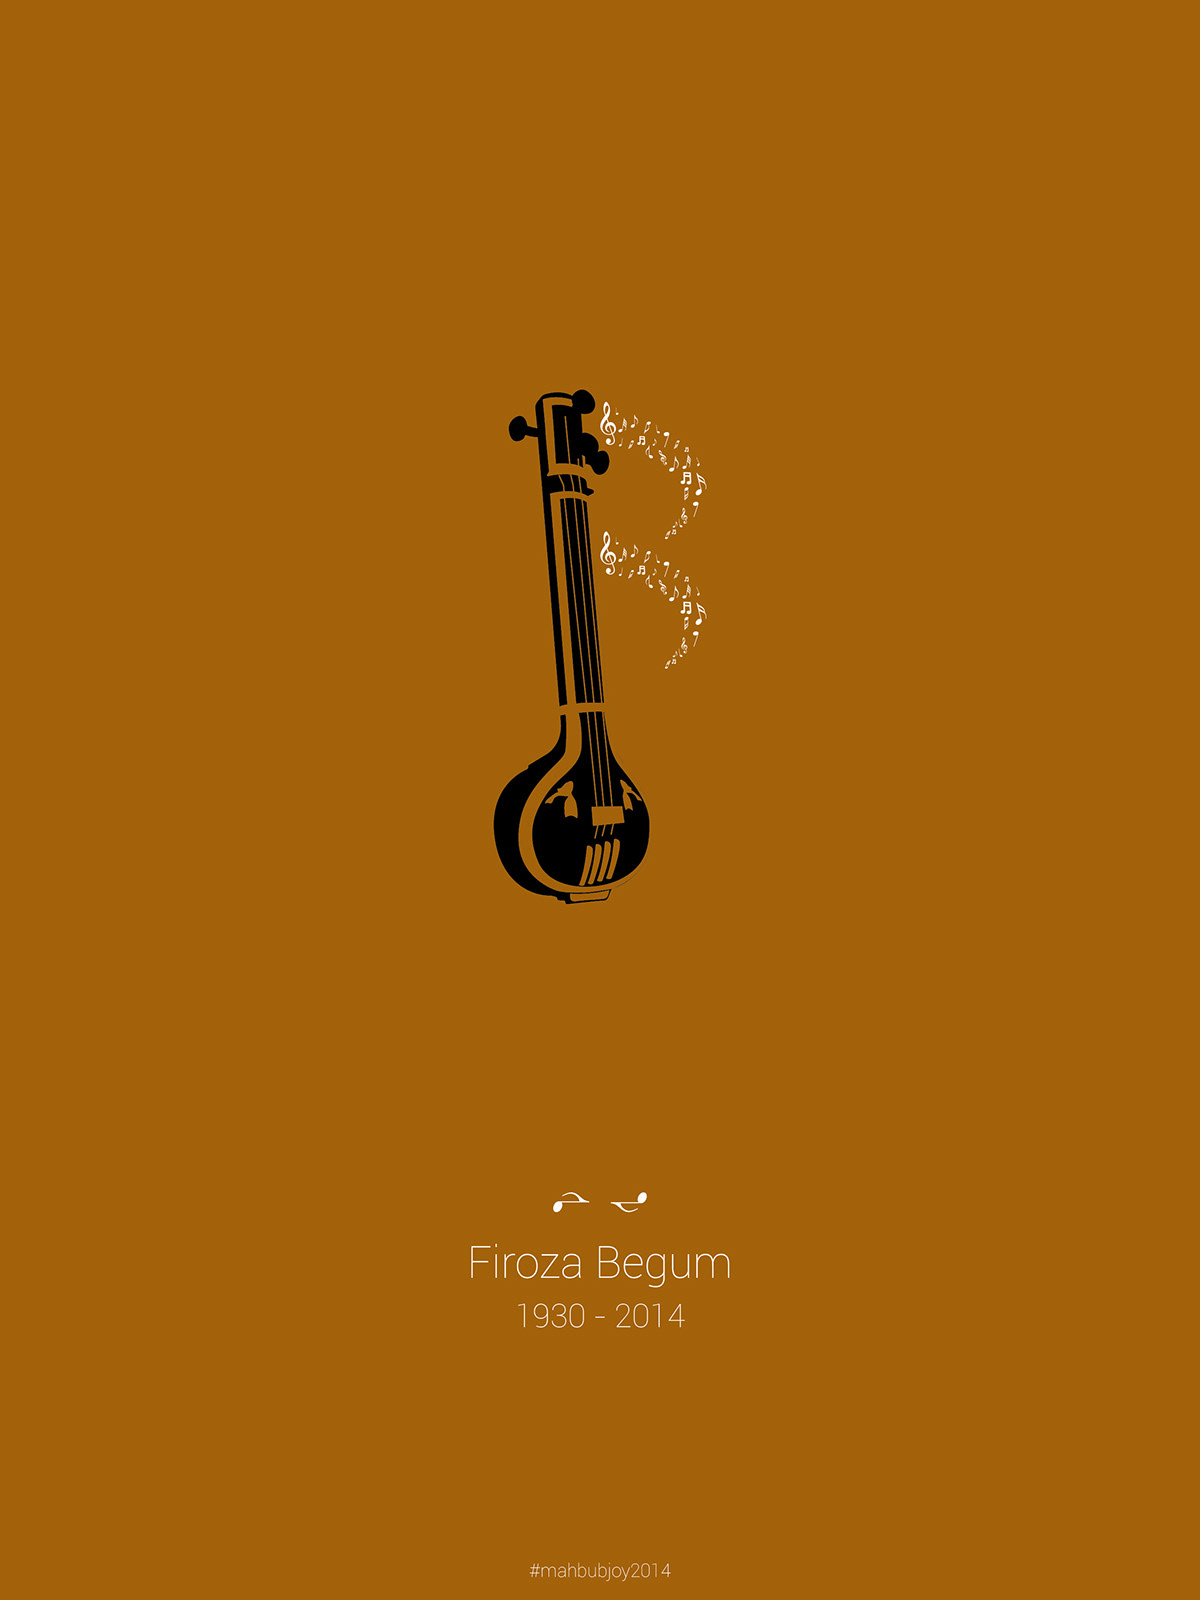 Singer Nazrul songs Firoza Begum Musician of Bangladesh creative illustration minimal